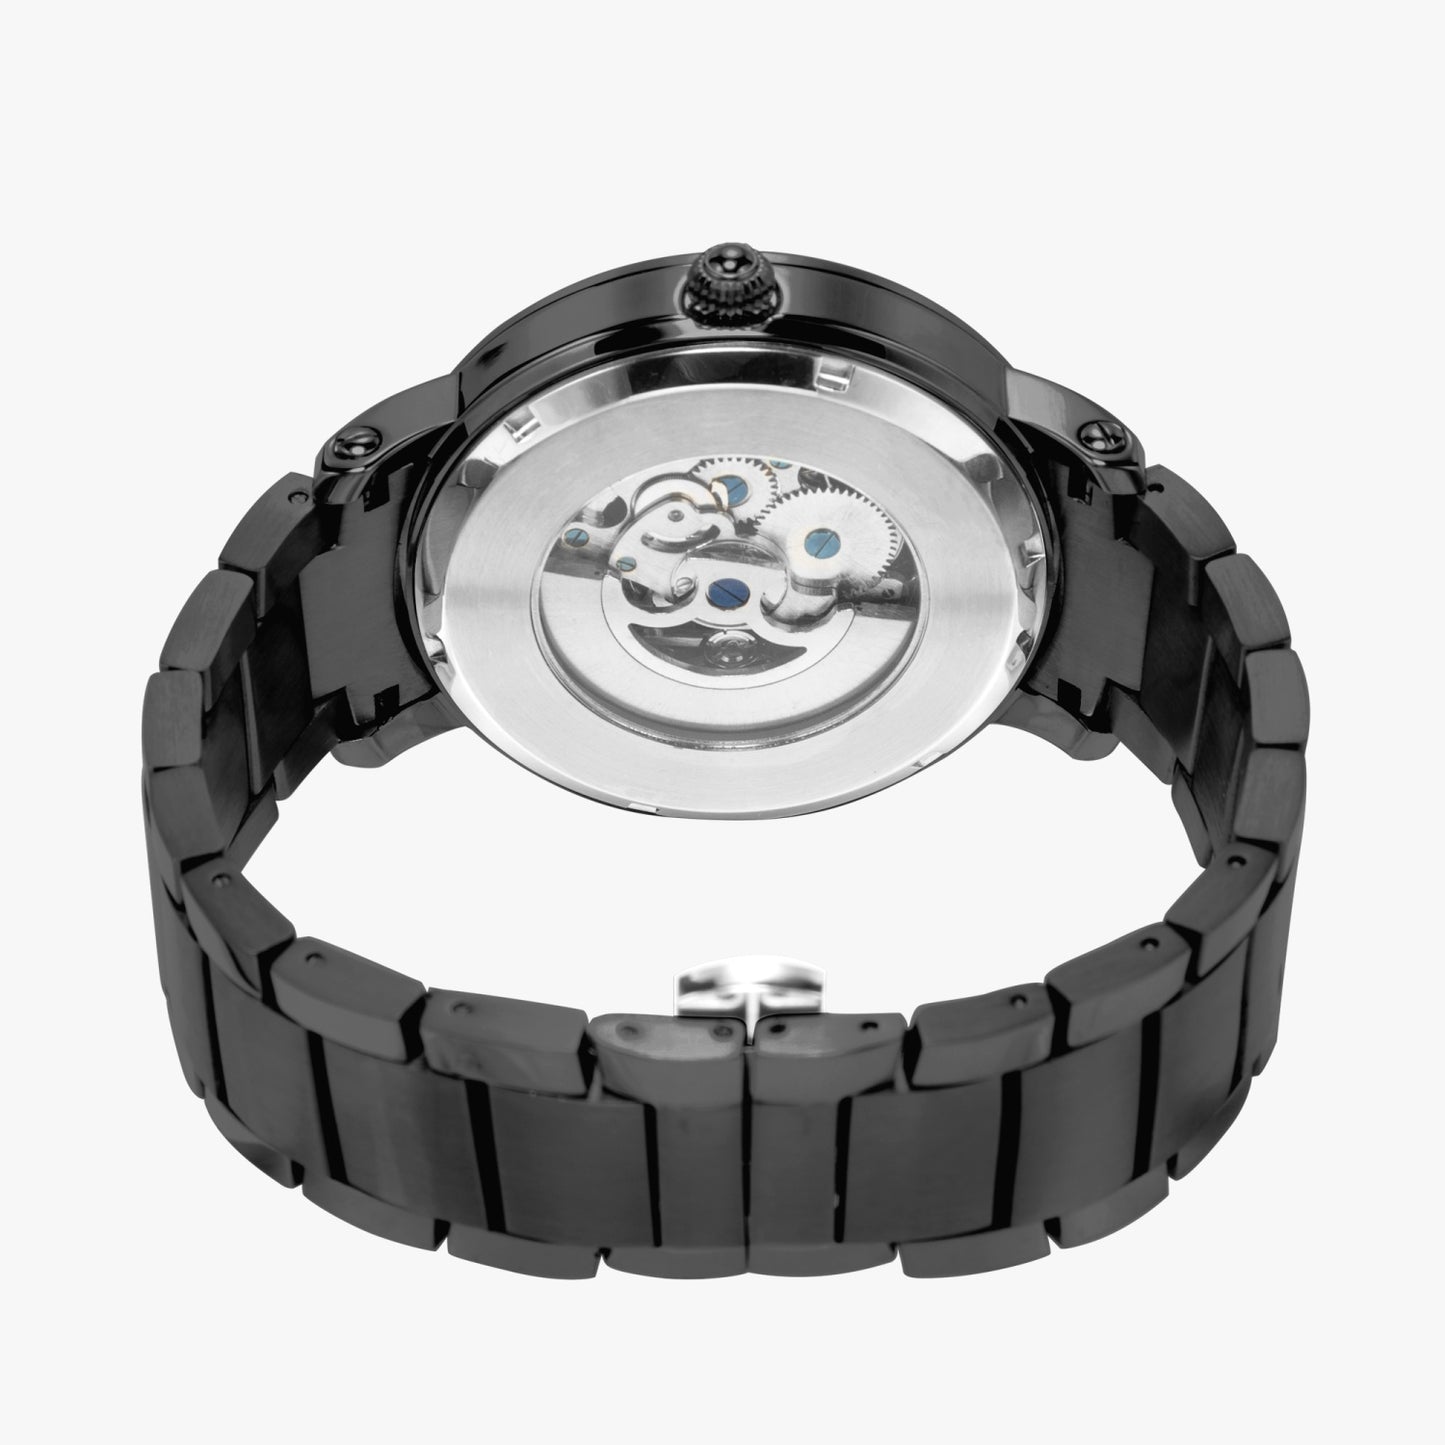 Hebrew Steel Strap Automatic Watch black back